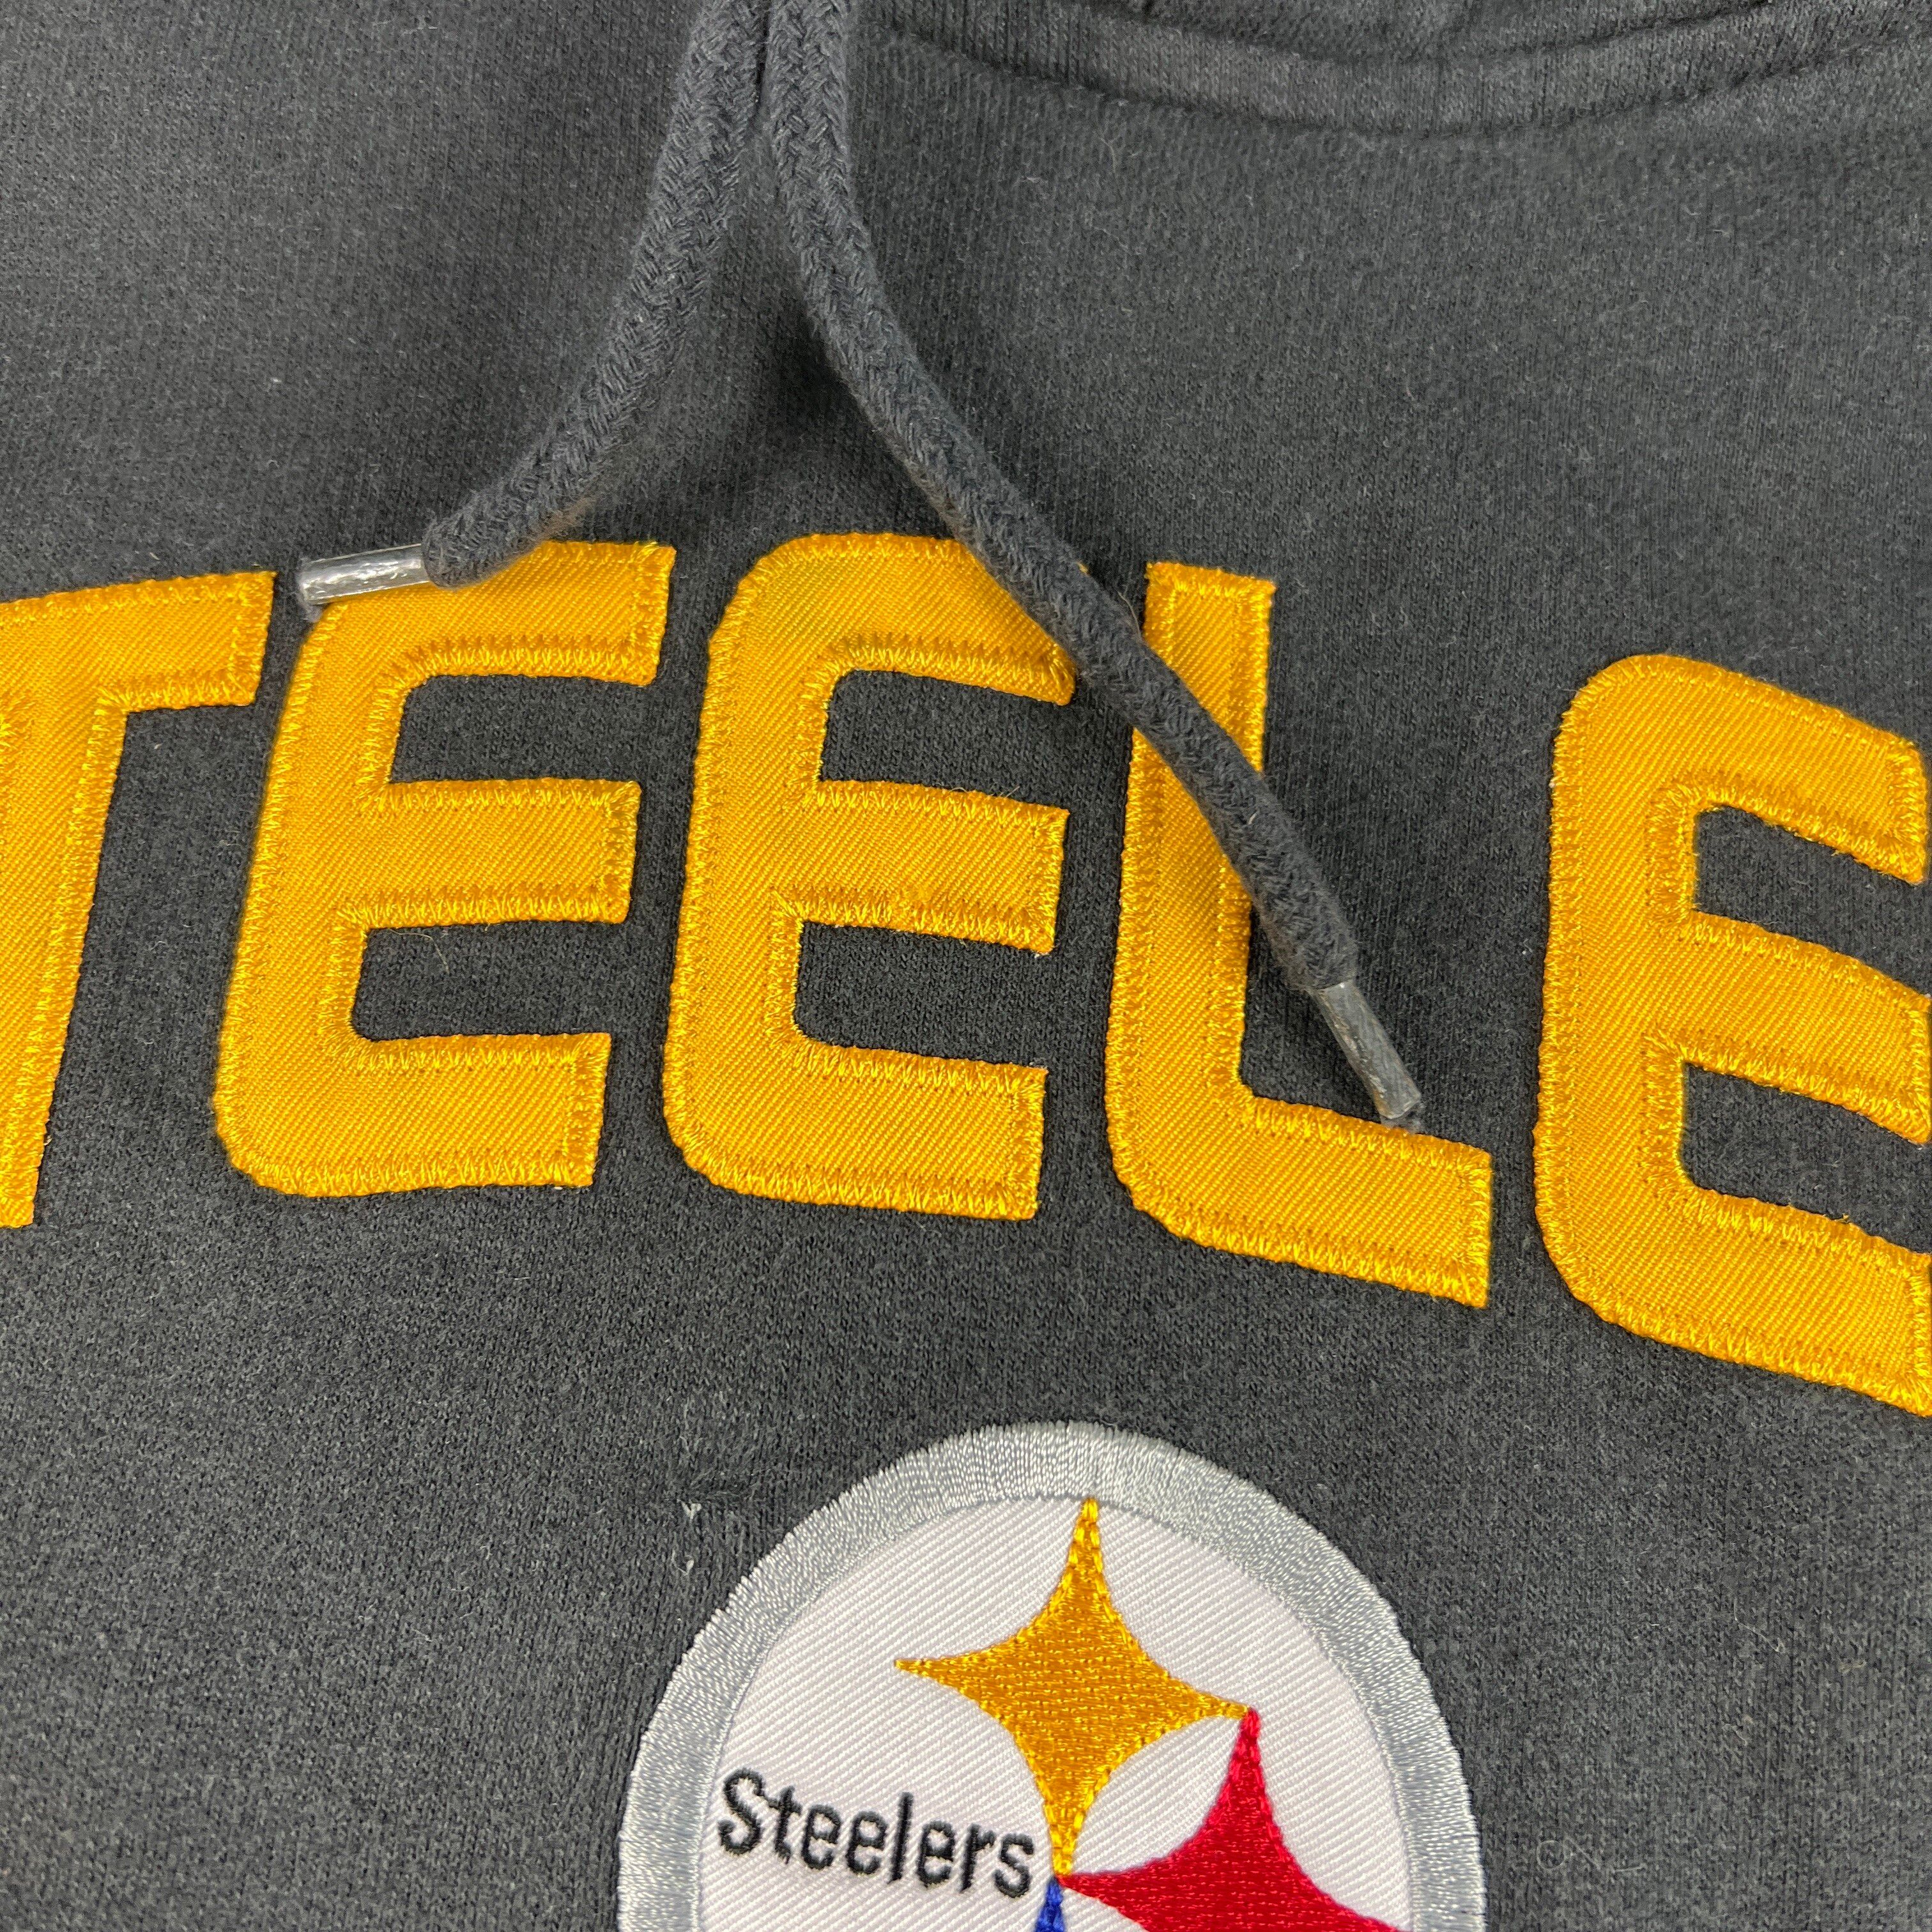 NFL NFL Pittsburgh Steelers Football Sweatshirt Pullover Hoodie Size US L / EU 52-54 / 3 - 7 Thumbnail